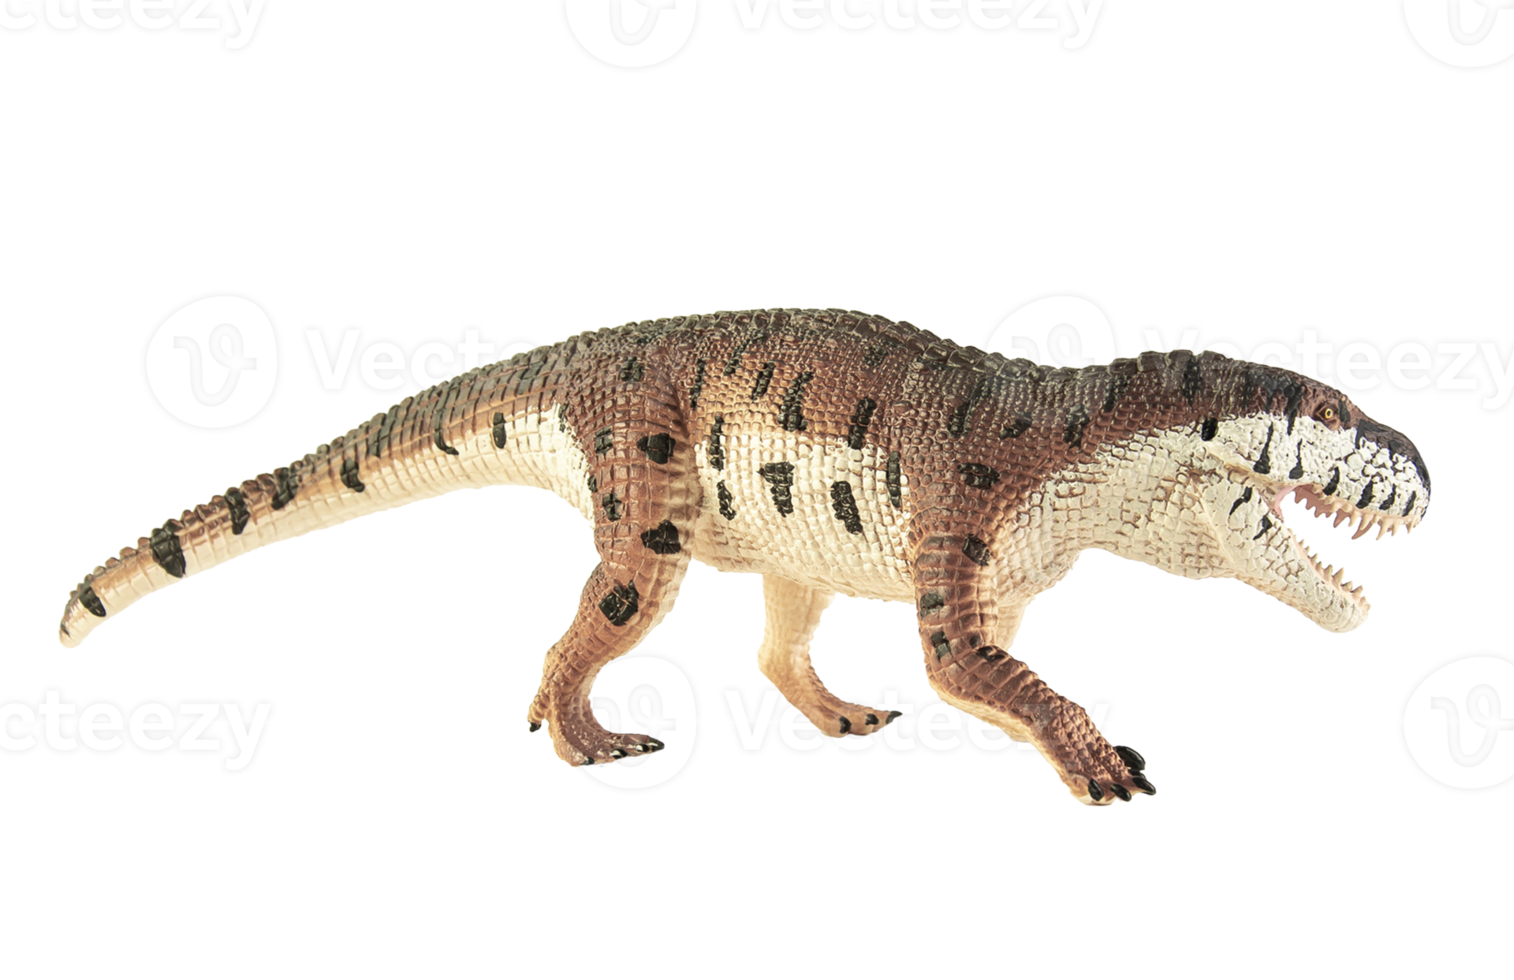 prestosuchus, dinosaurie på vit bakgrund. png